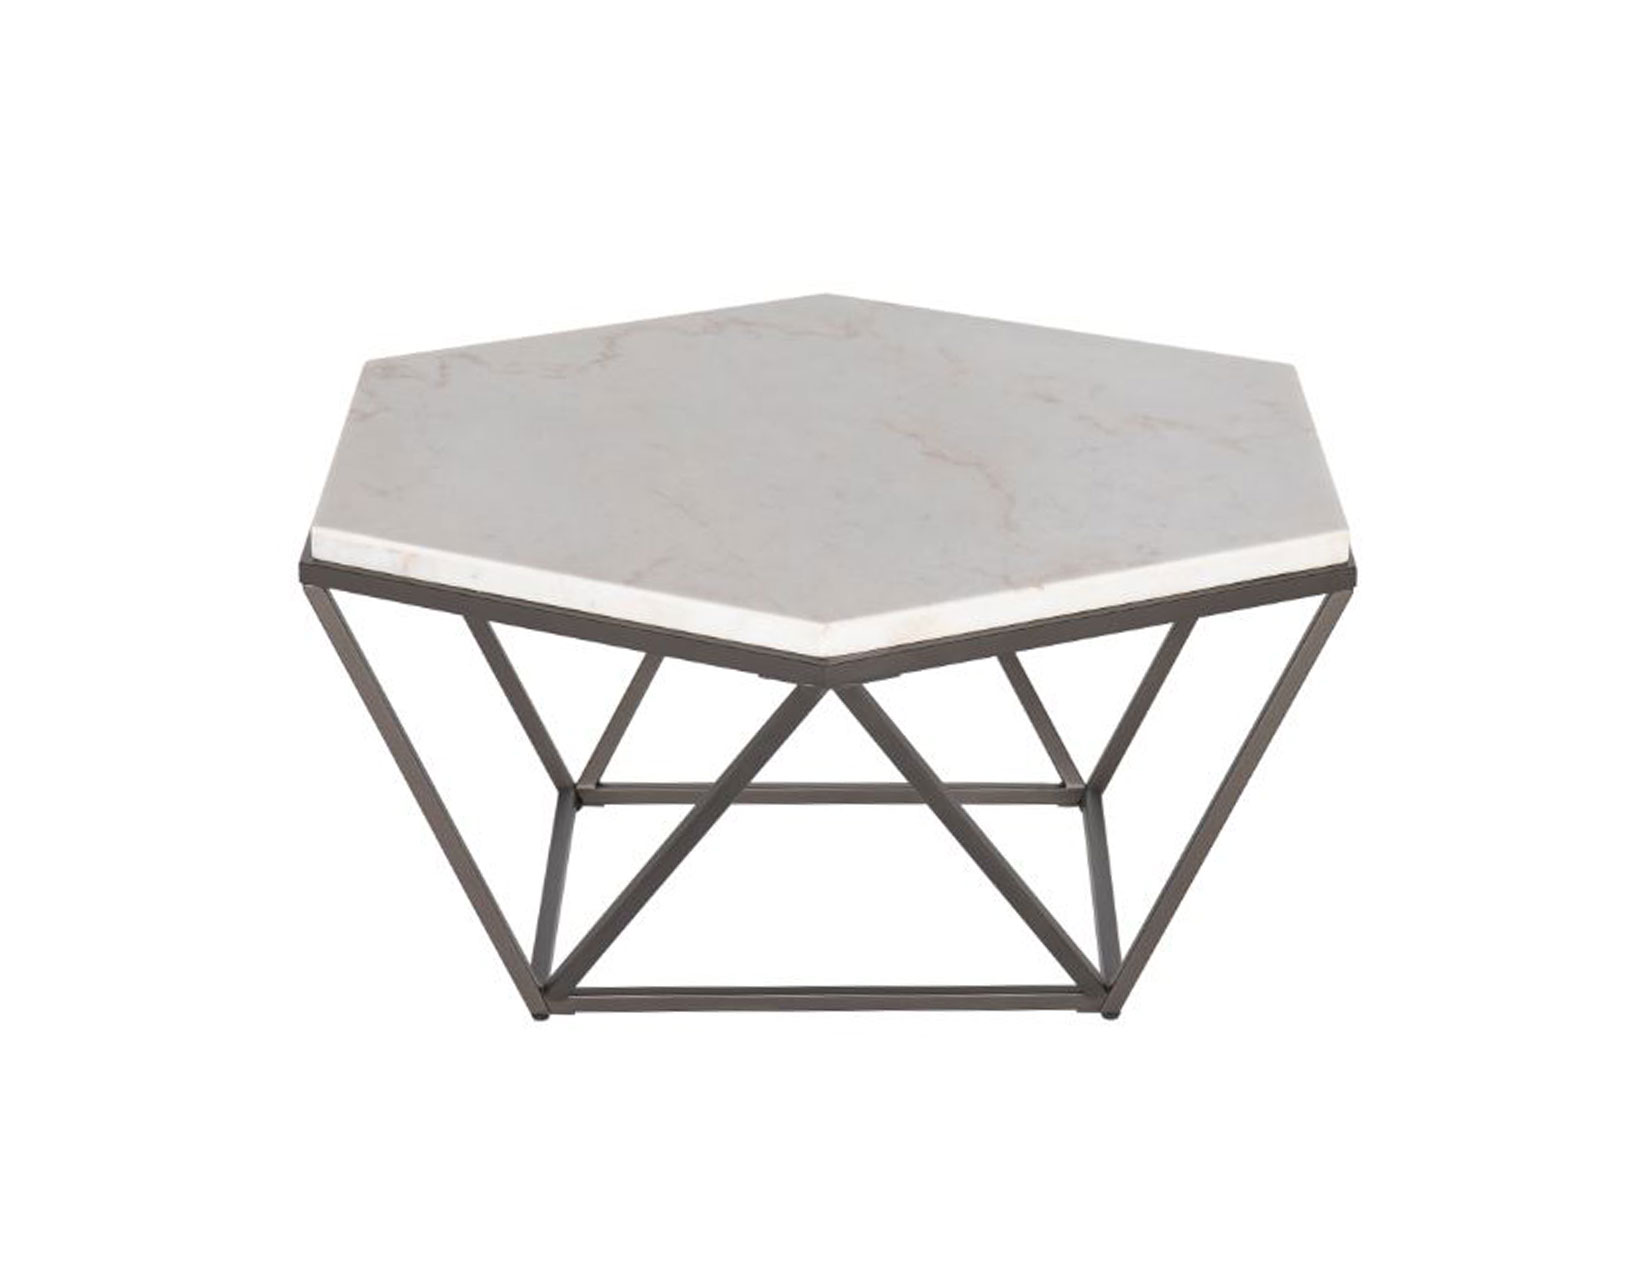 Corvus White Marble Top HexagonCocktail Table - DFW